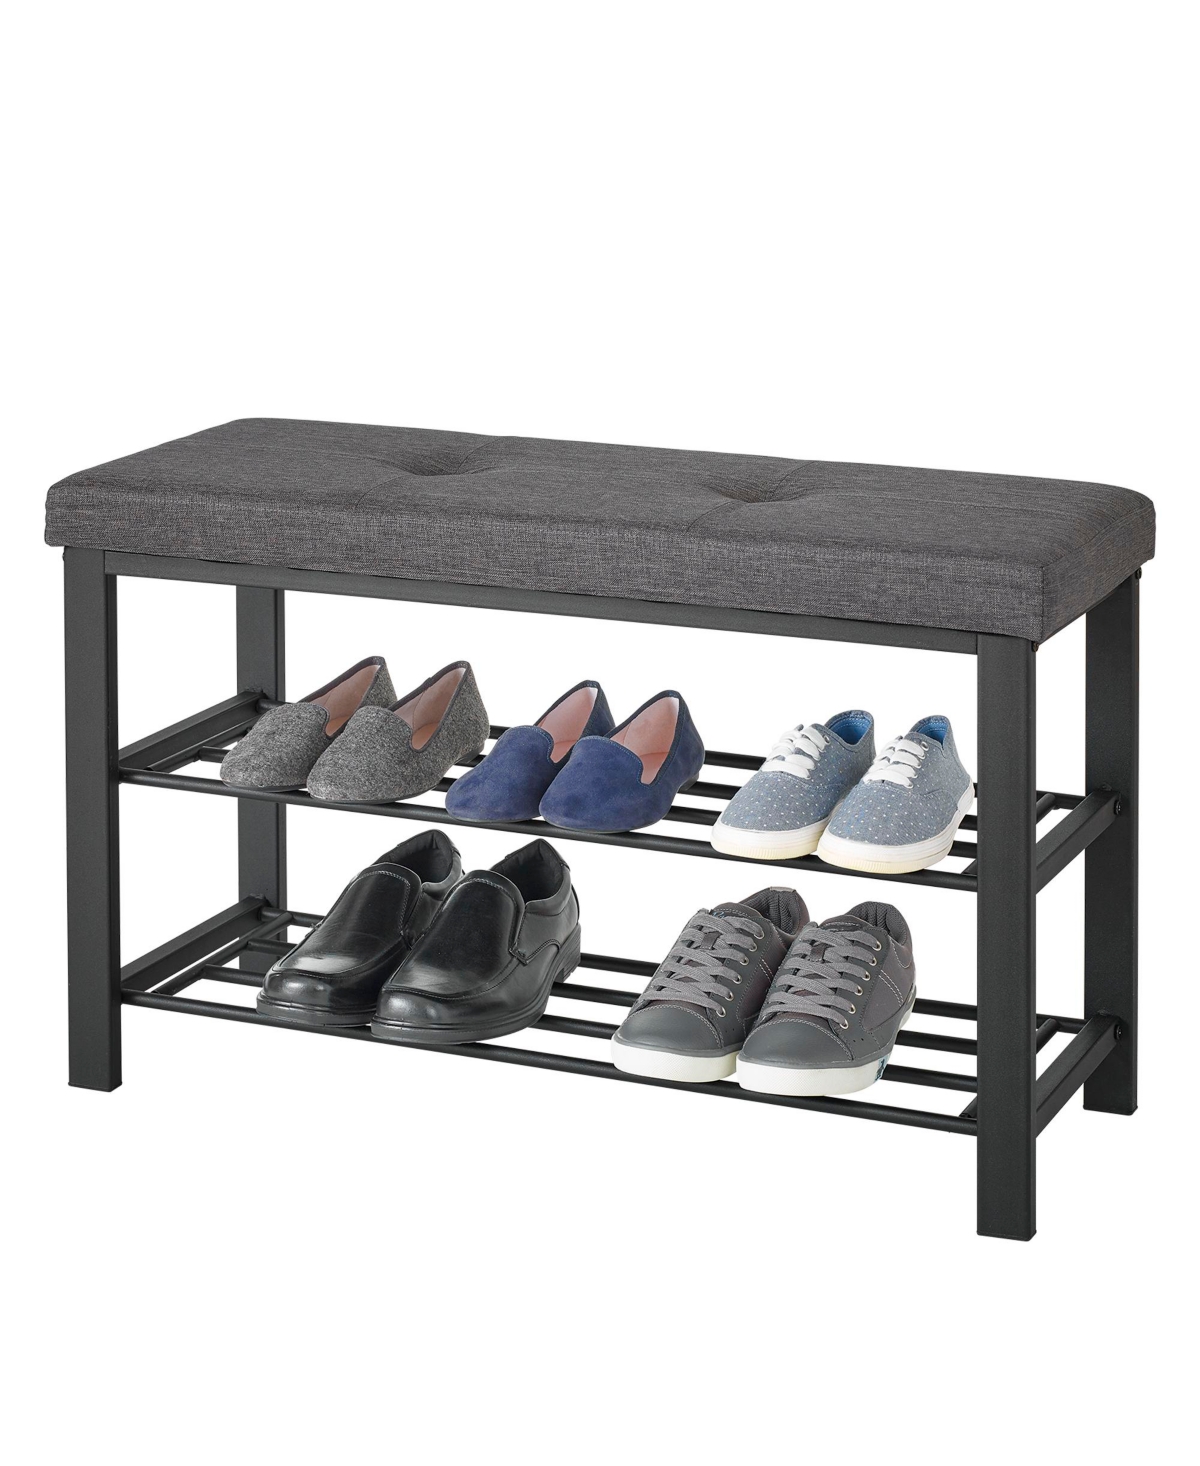 Fabric Upholstered Shoe Storage Bench - Nika Gray, Brushed Nickel